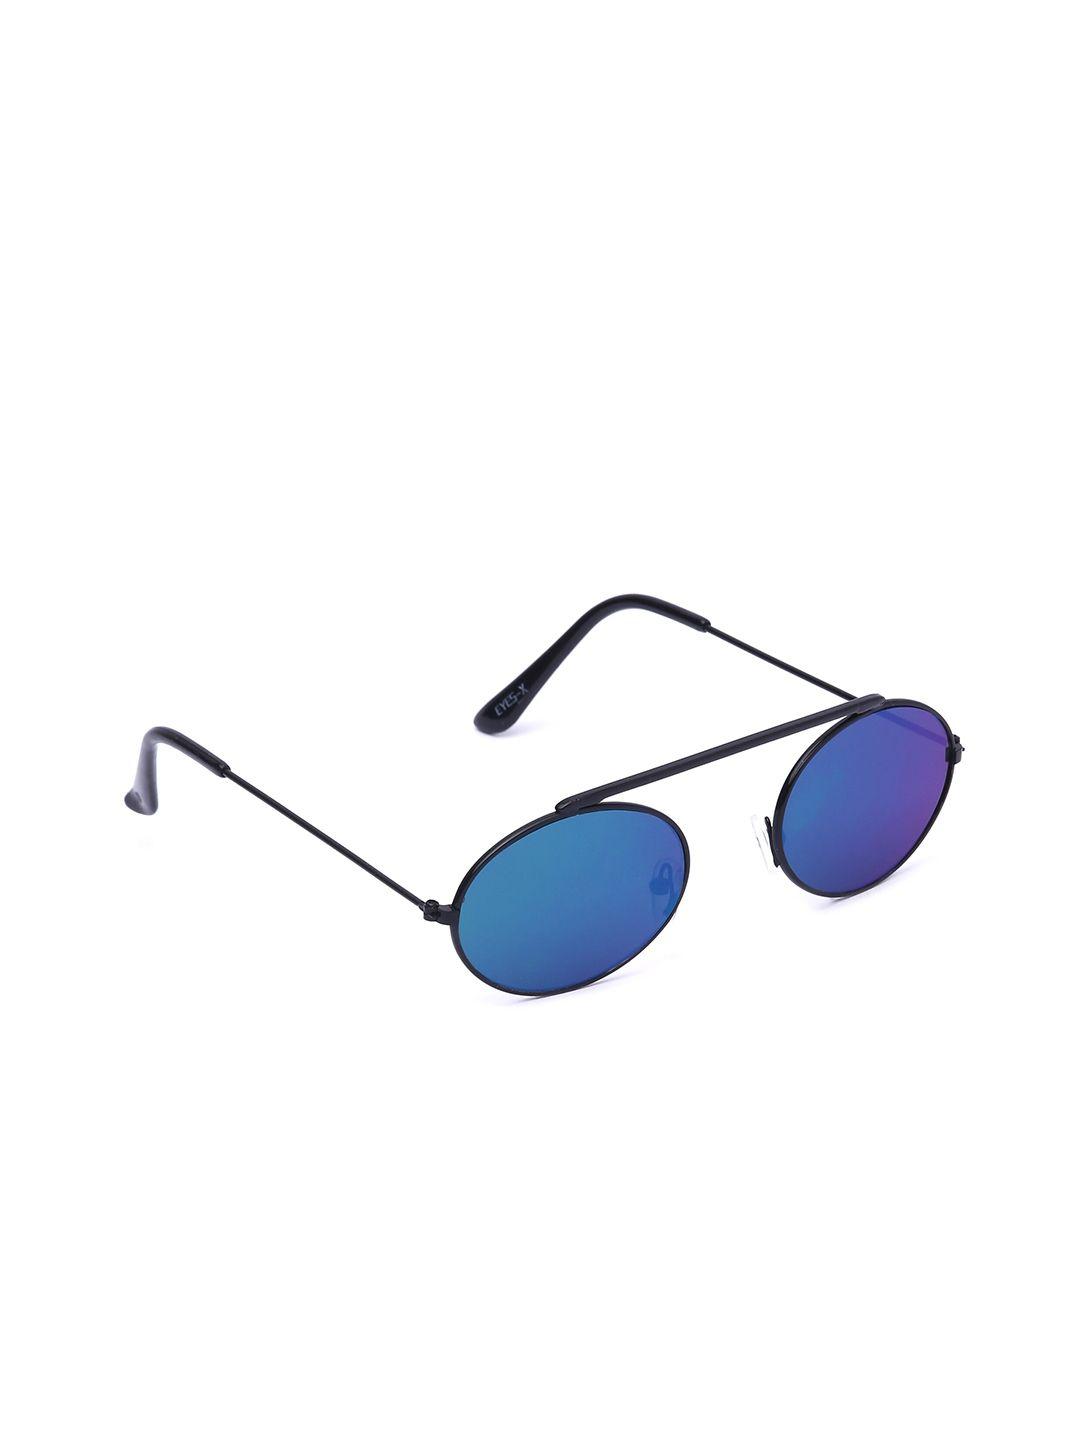 swiss design women oval sunglasses with uv protected lens sdgsw-5716402